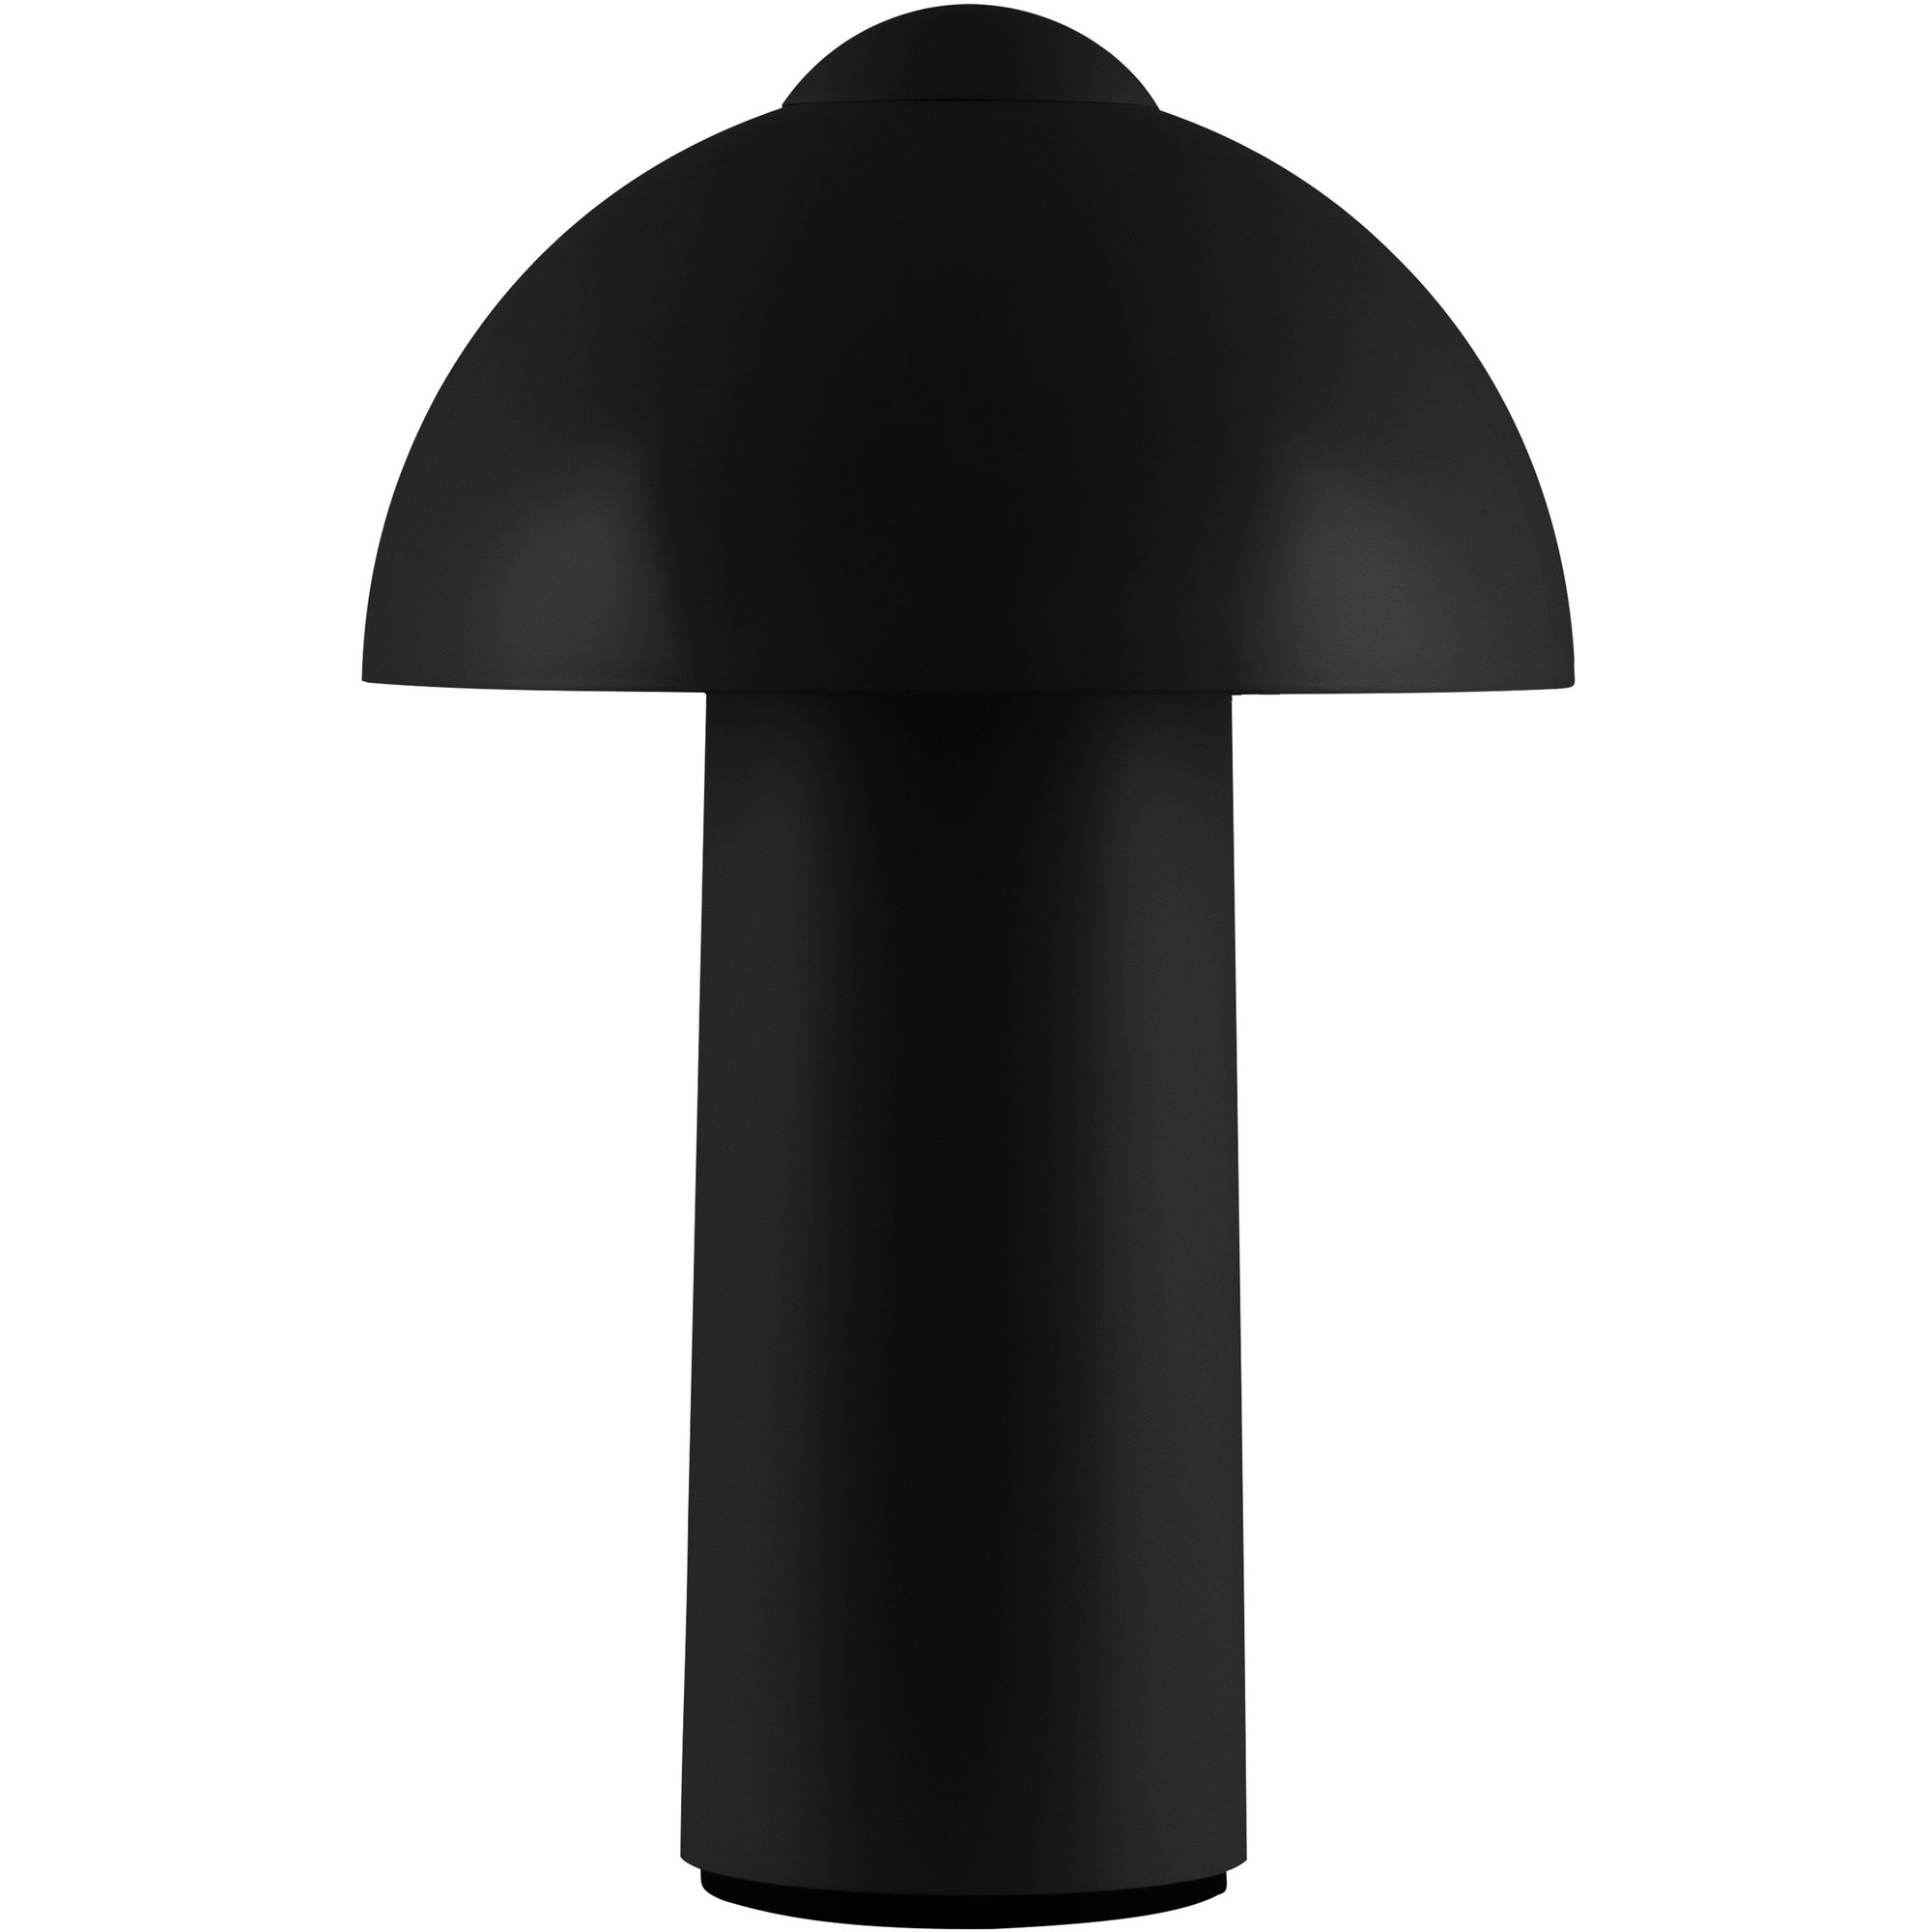 Globen Lighting Buddy IP44 portabel bordslampa, svart